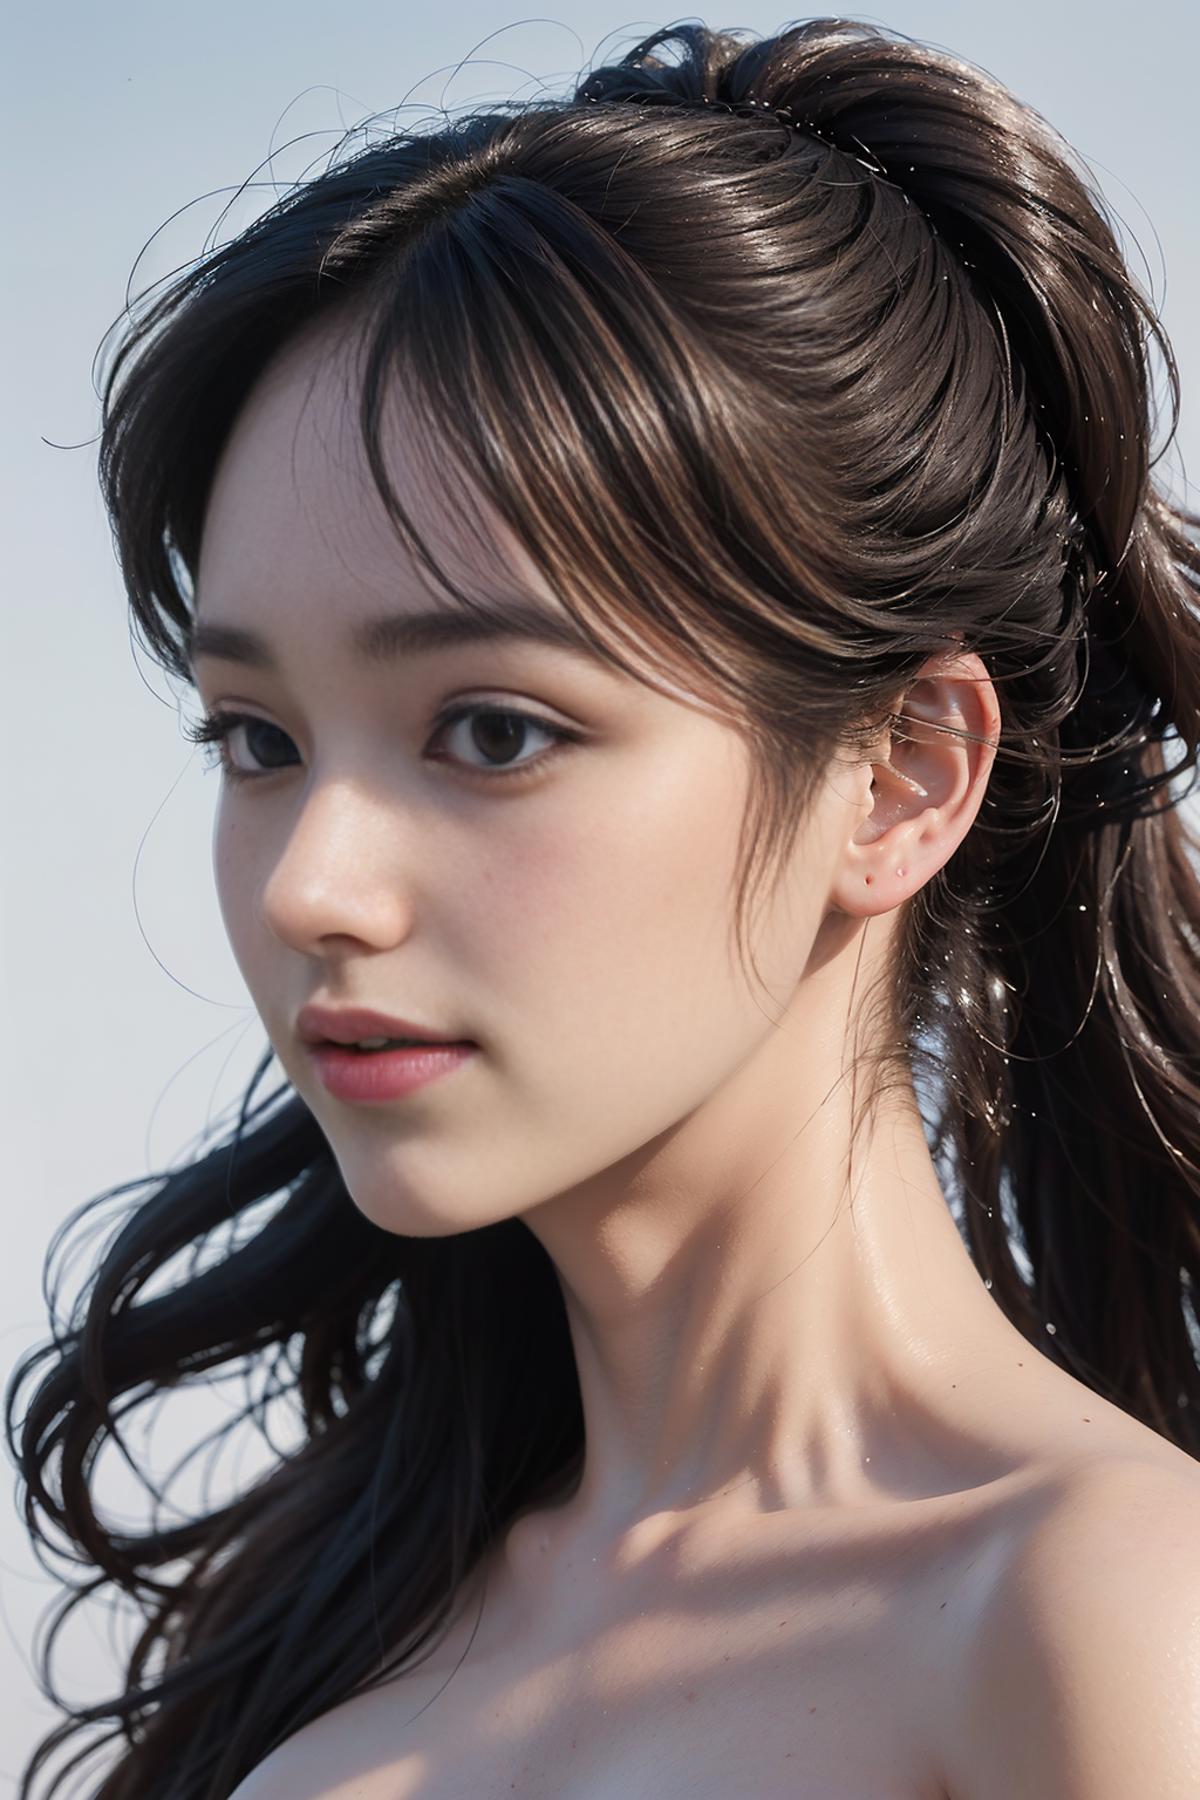 [2731] Asian Girls ( Pretty Asian Girls) image by _2731abc